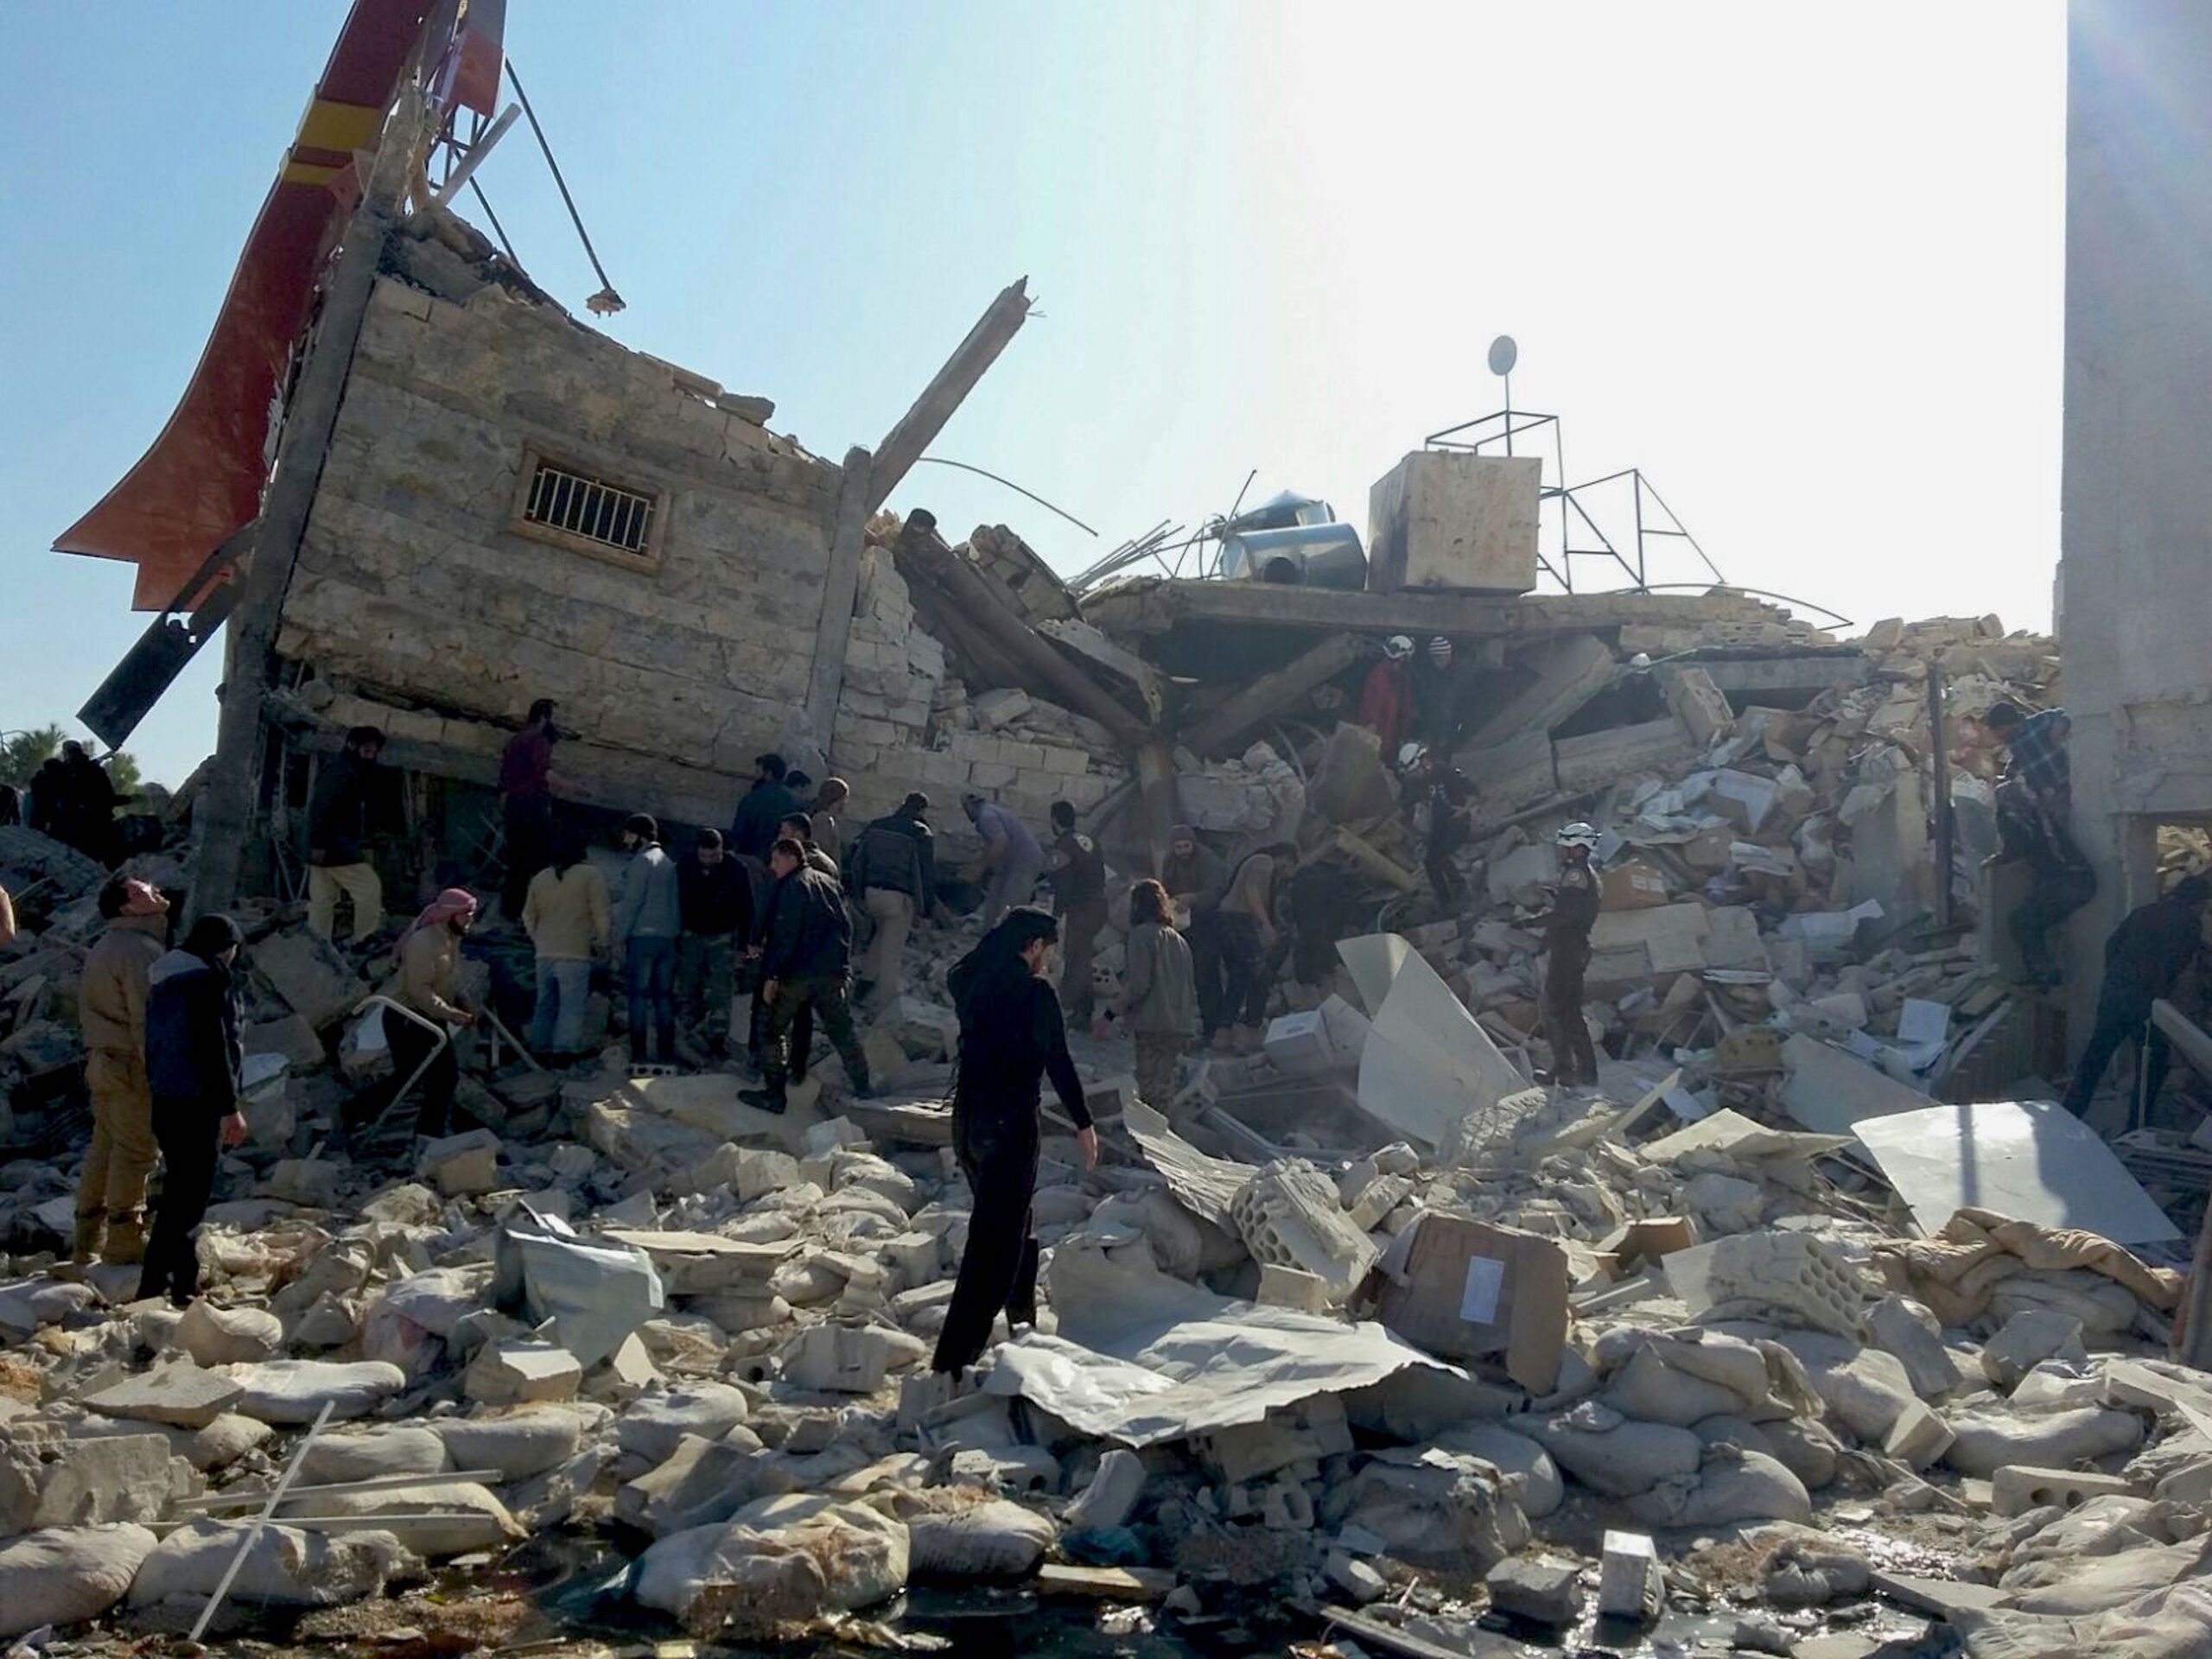 Dozens of Syria health facilities hit last year – MSF